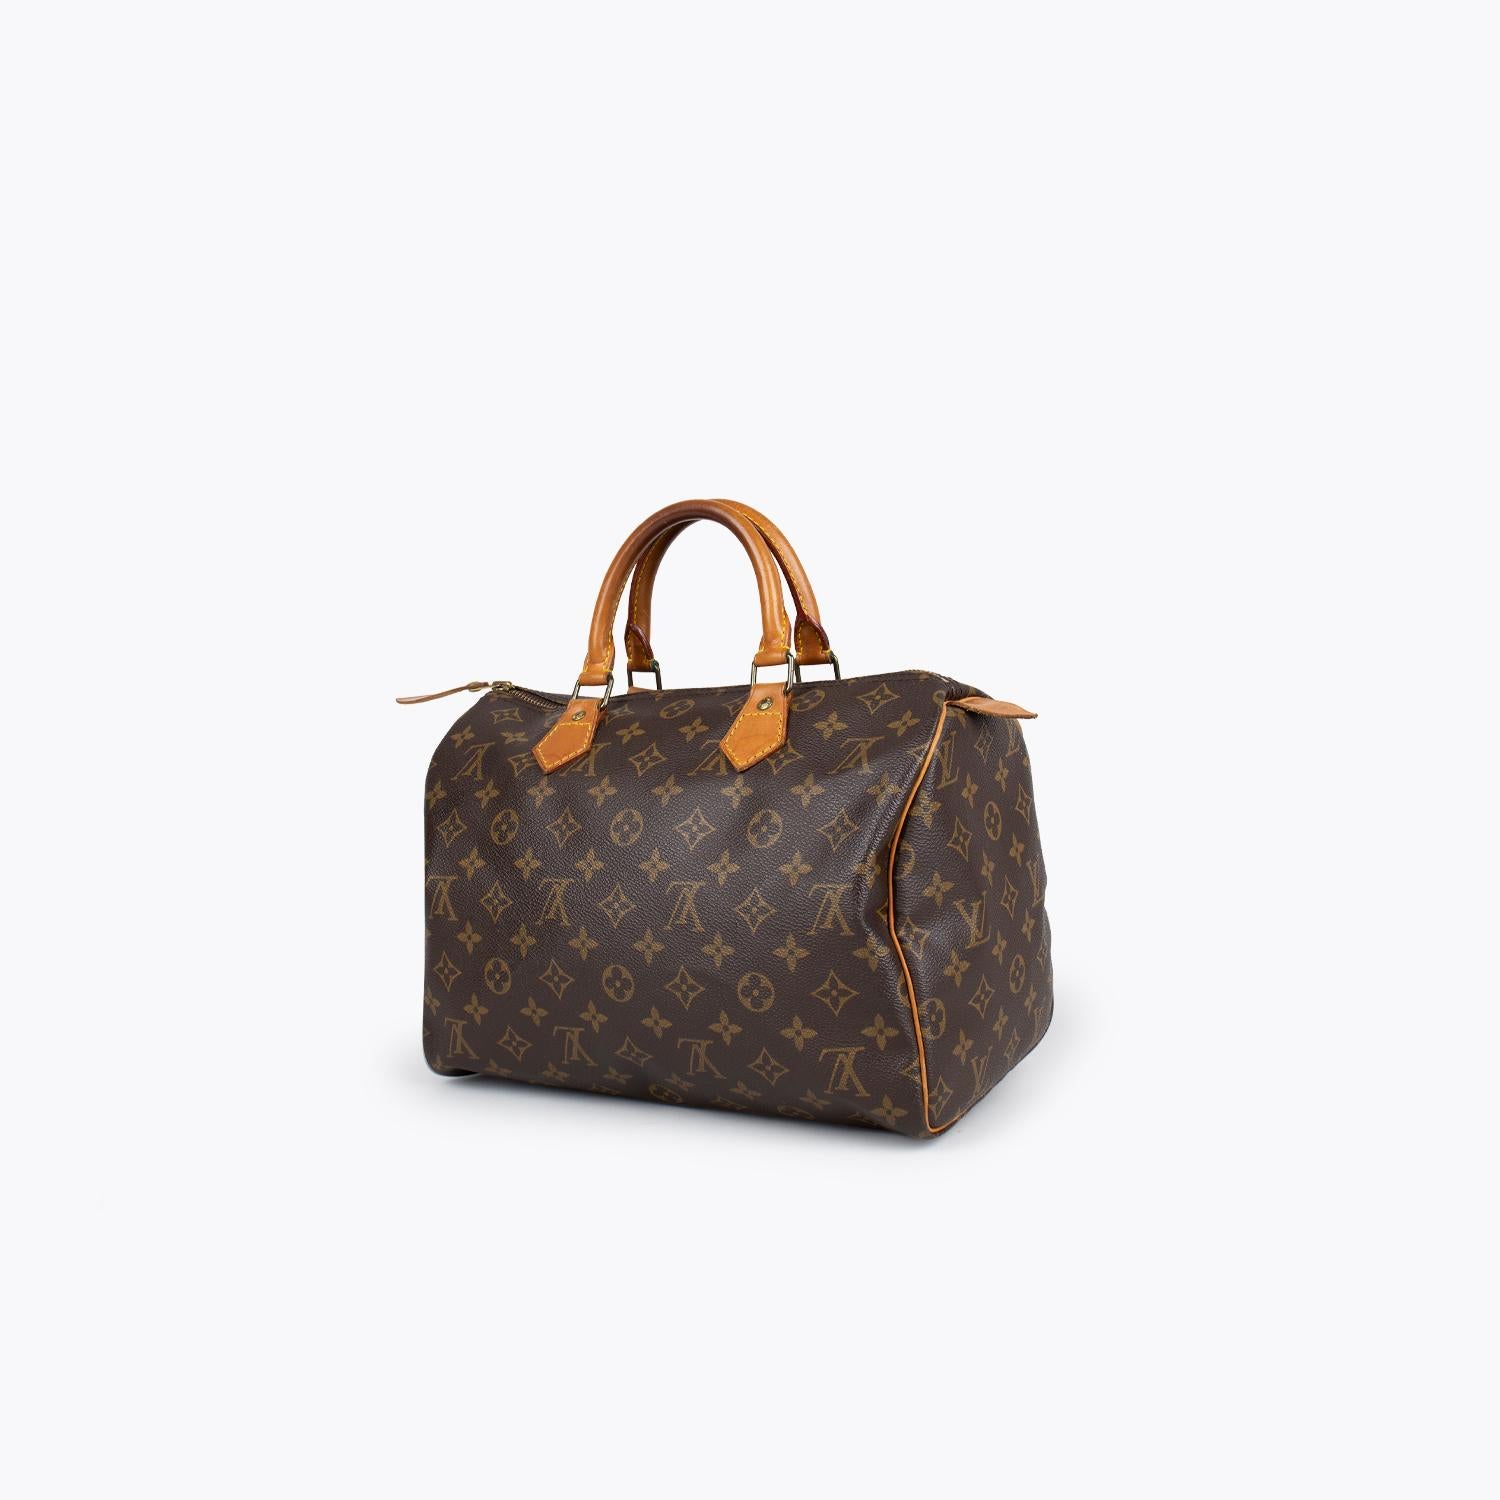 Louis Vuitton Speedy Monogram 30 Handbag  In Good Condition For Sale In Sundbyberg, SE